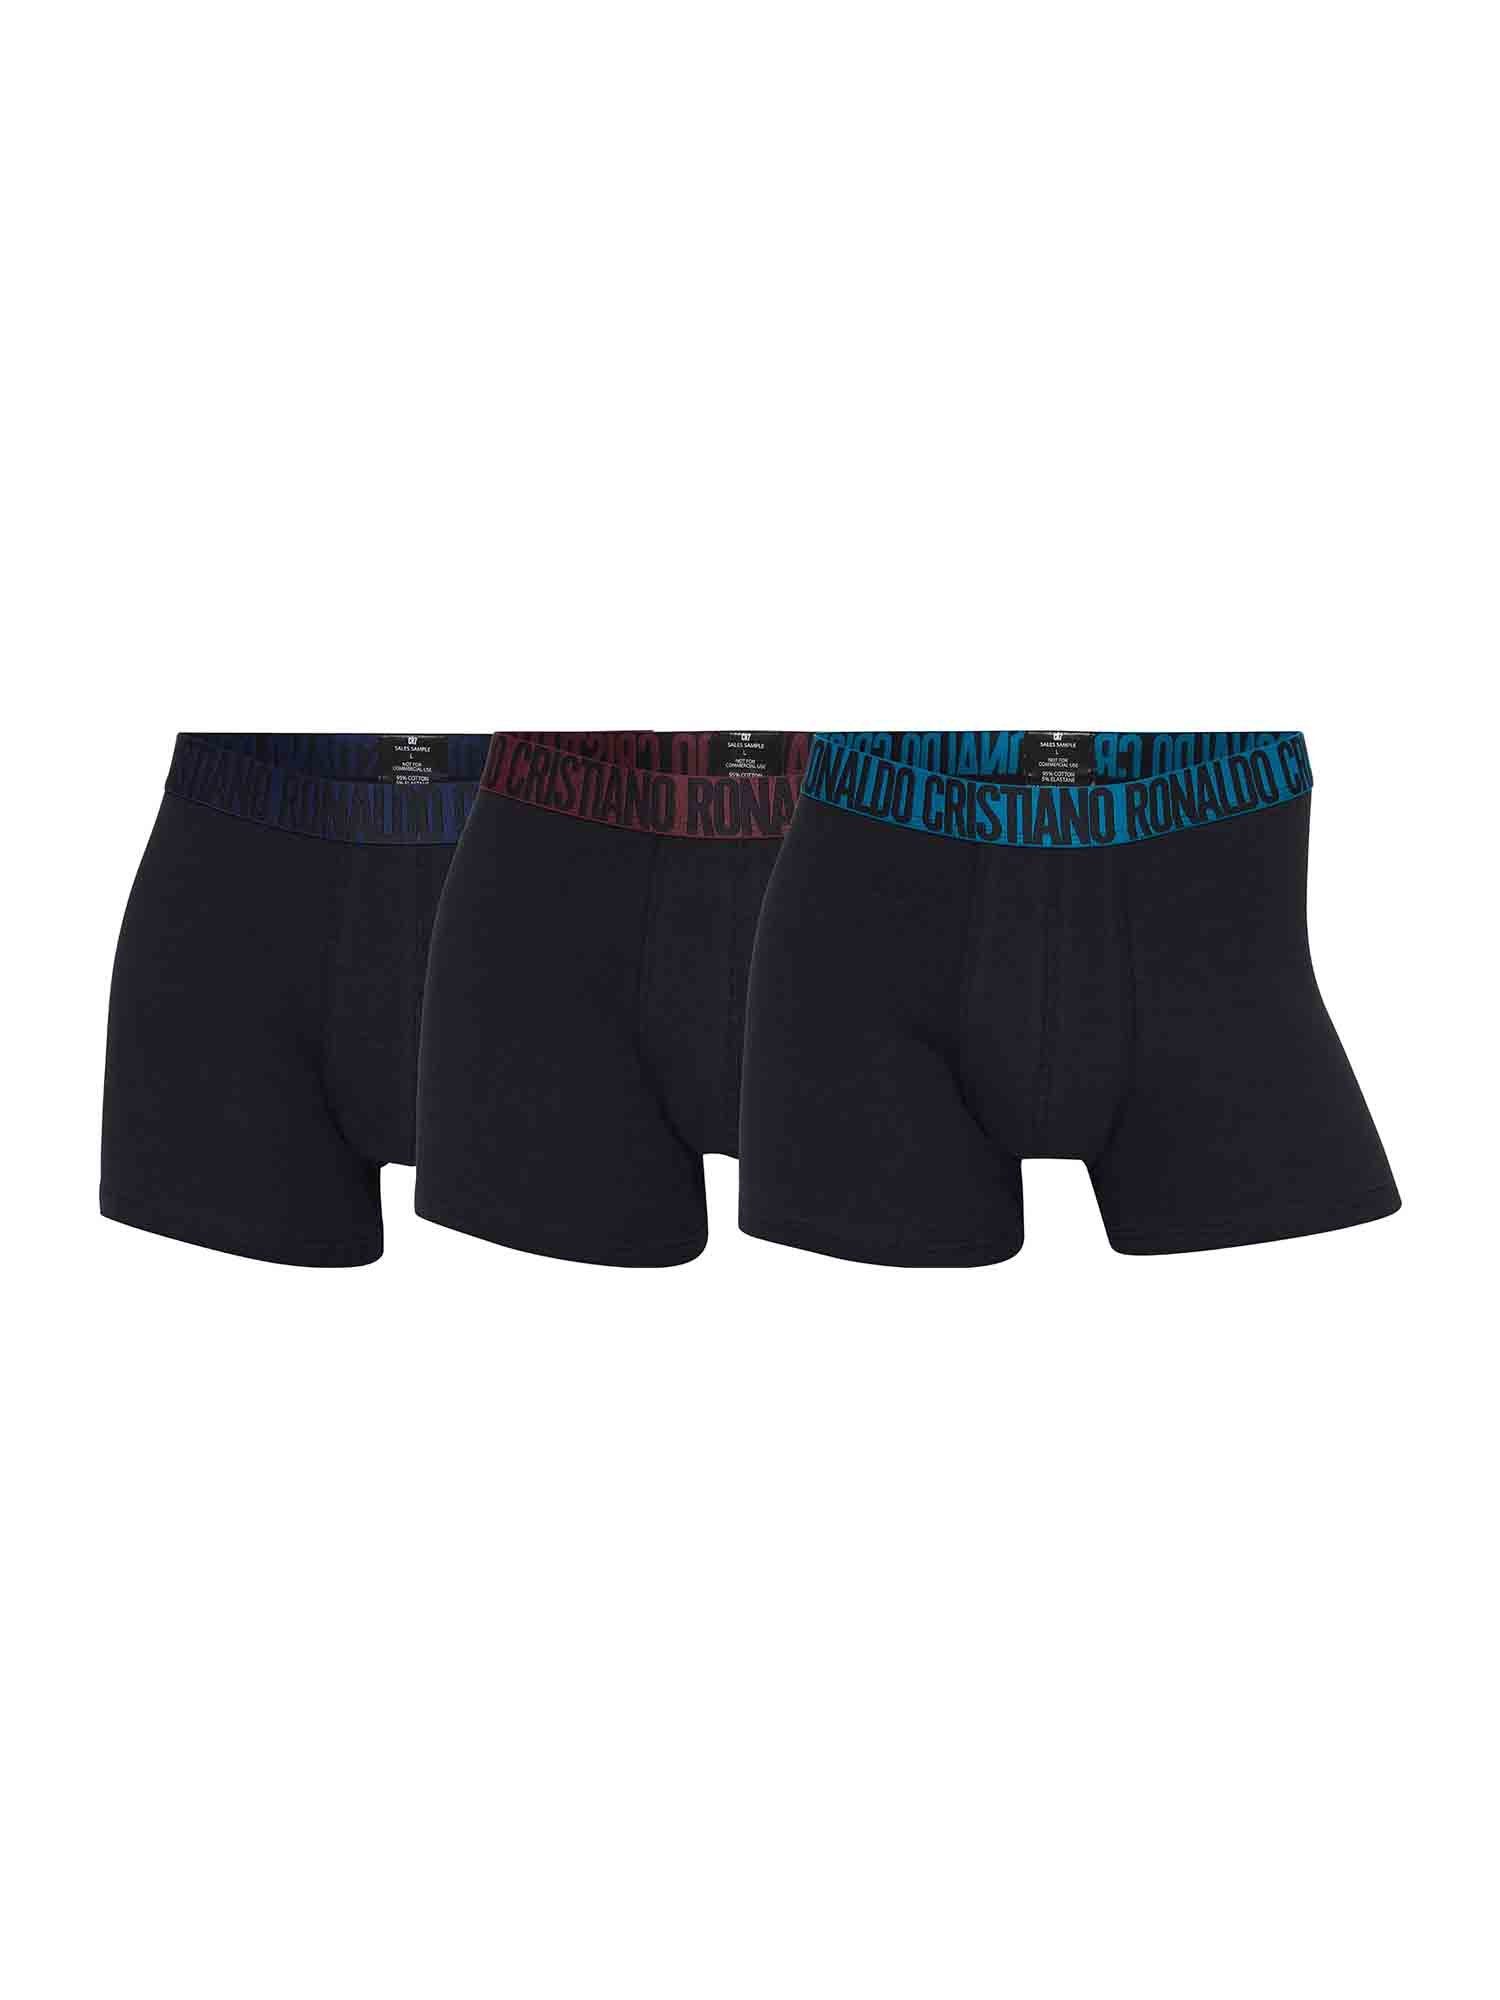 Multipack (3-St) Männer Multi Pants Boxershorts CR7 Retro Retro 13 Pants Trunks Herren